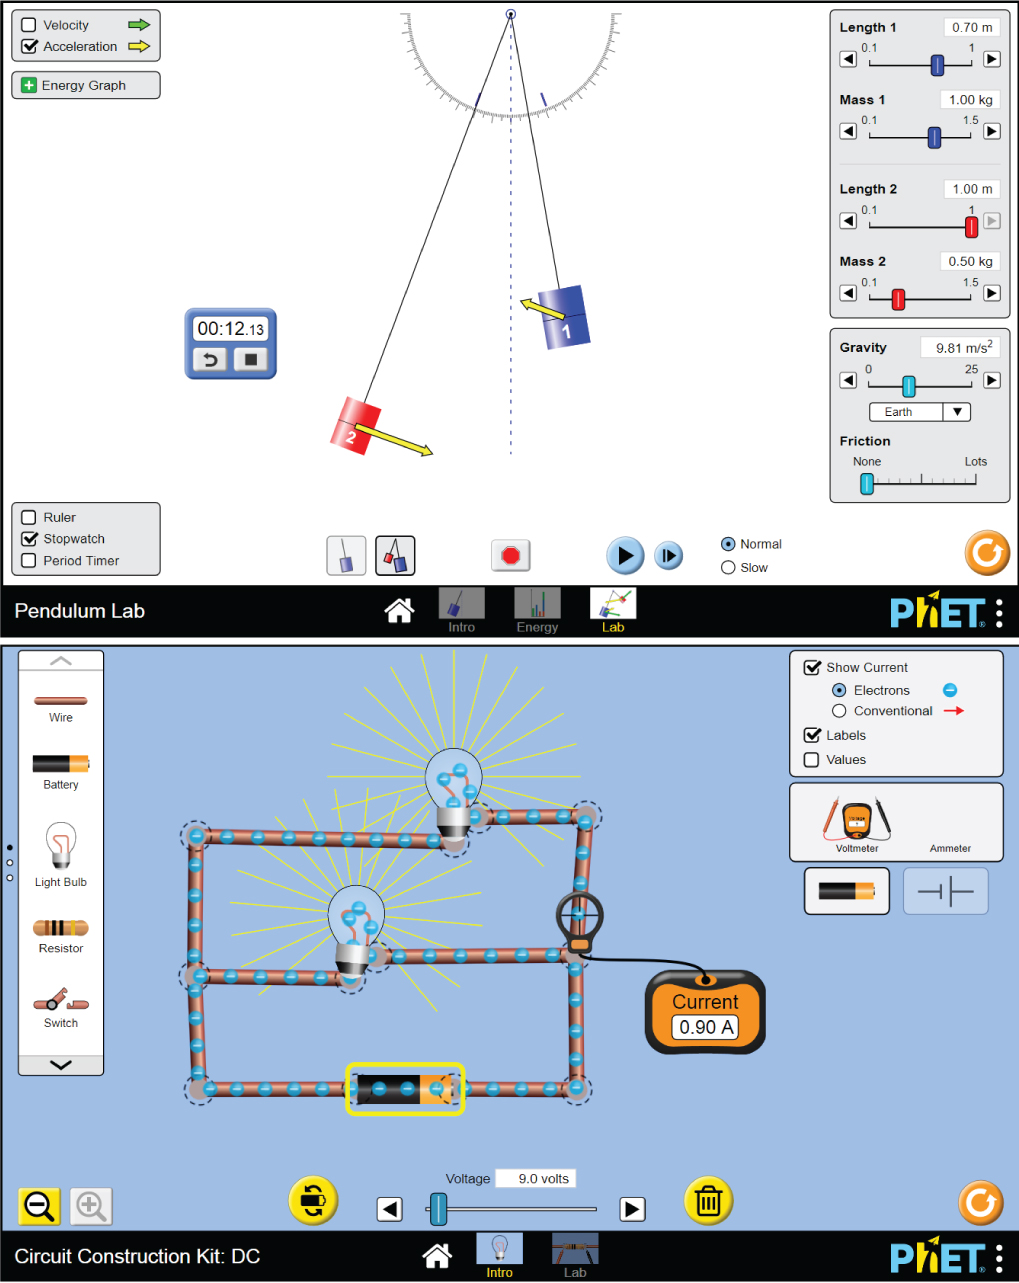 PhET simulations: Pendulum Lab and Circuit Construction Kit: DC.